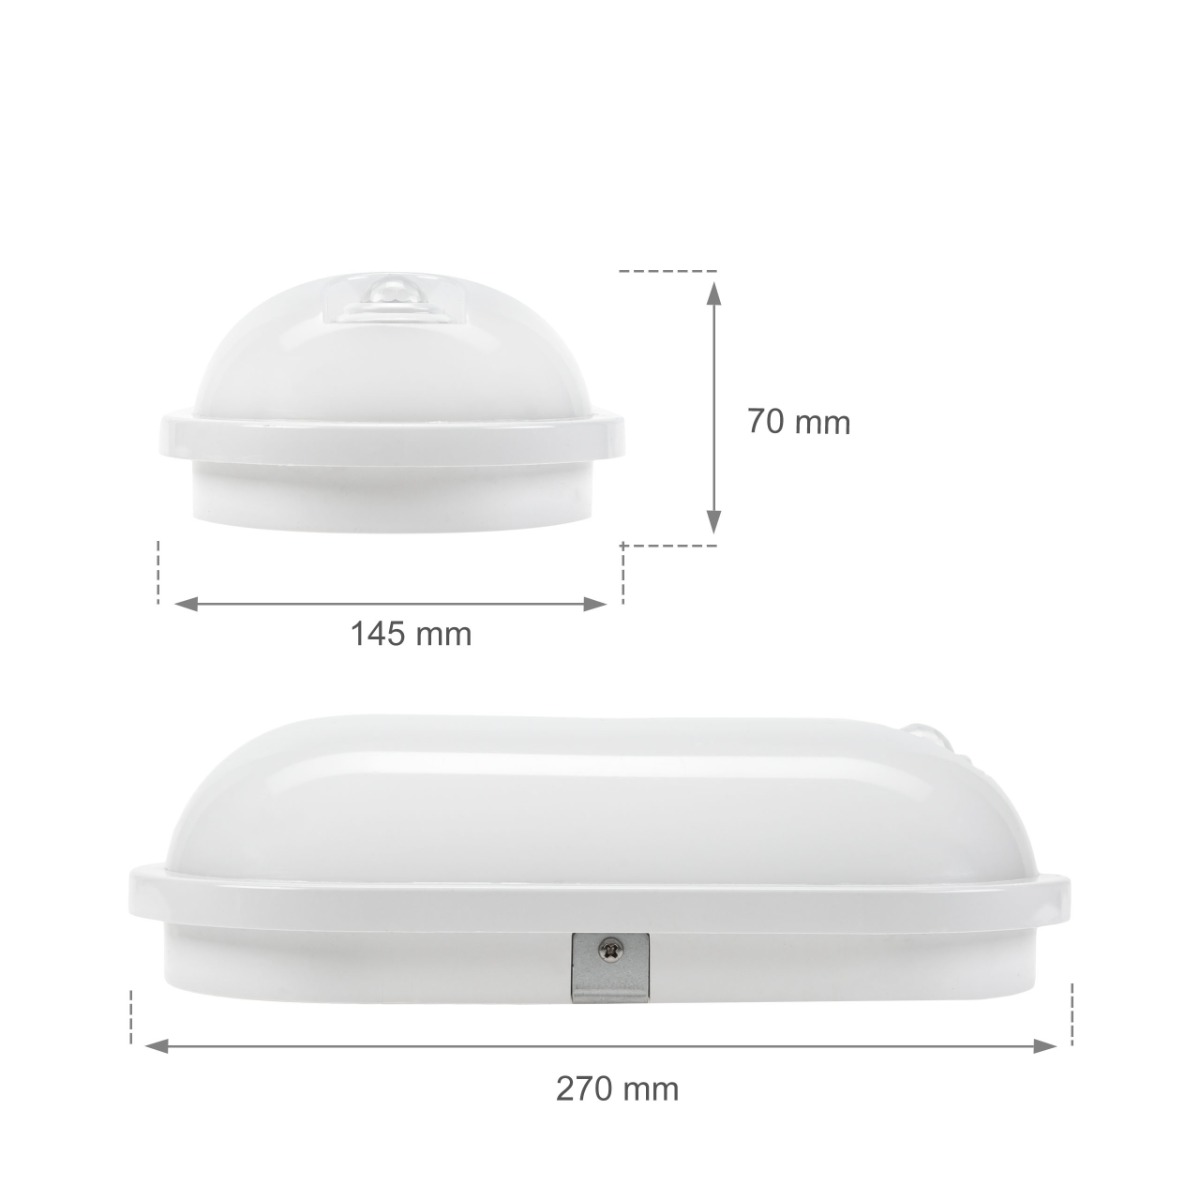 Oval surface-mounted LED lamp with motion sensor, 20 watts, 115 lumens/watt, K4000